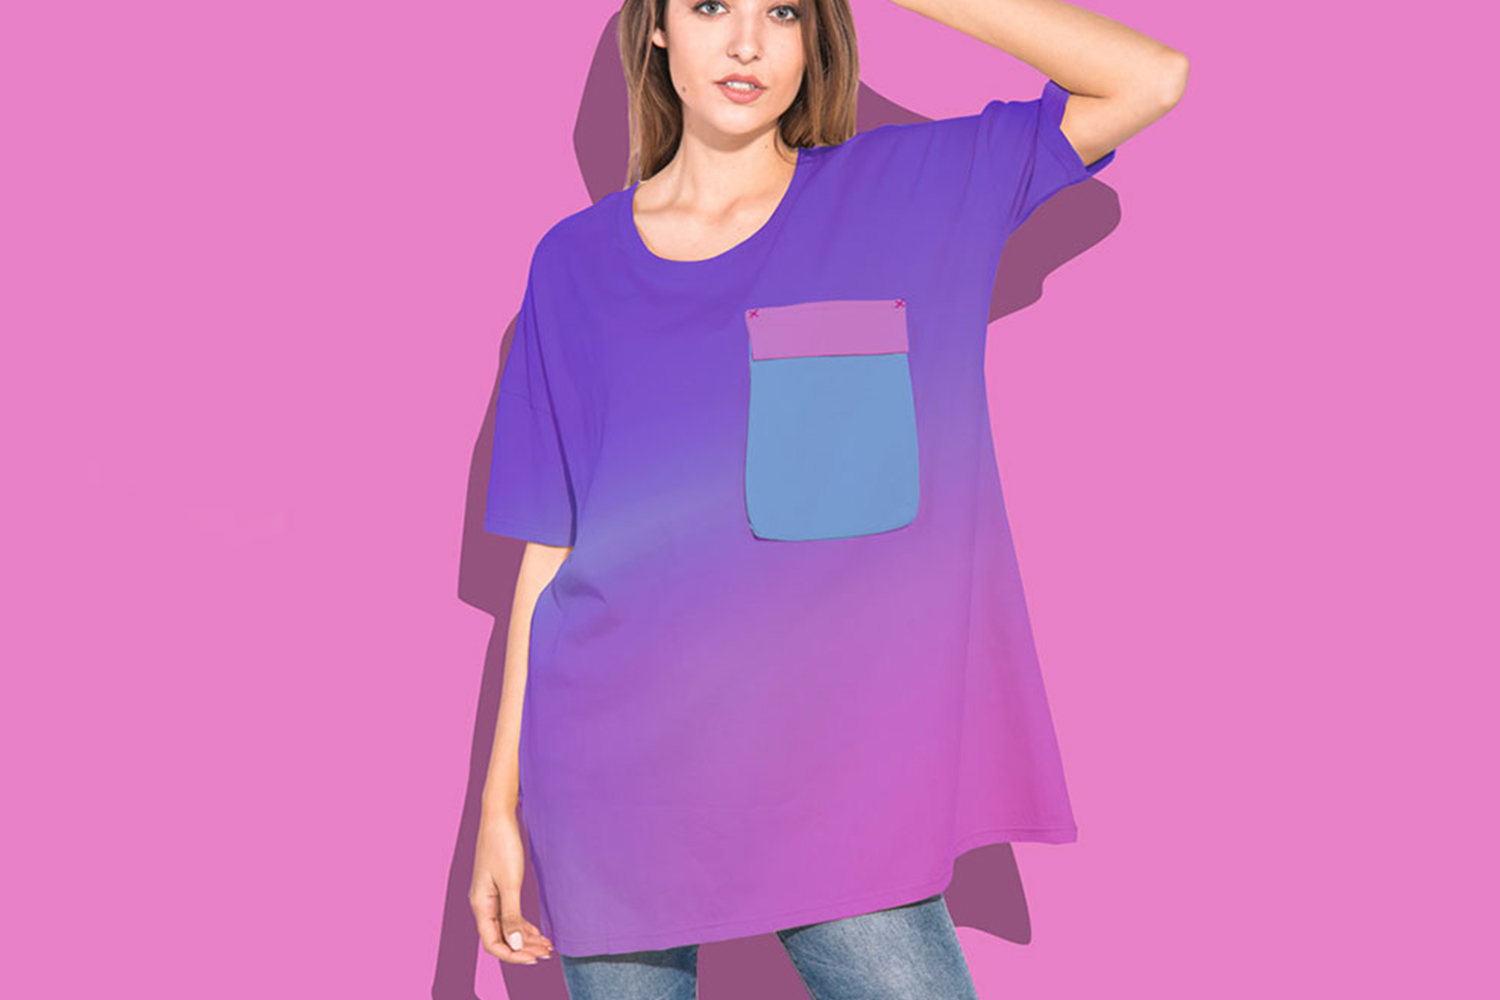 Woman Oversize T-Shirt Mockup Free Download 